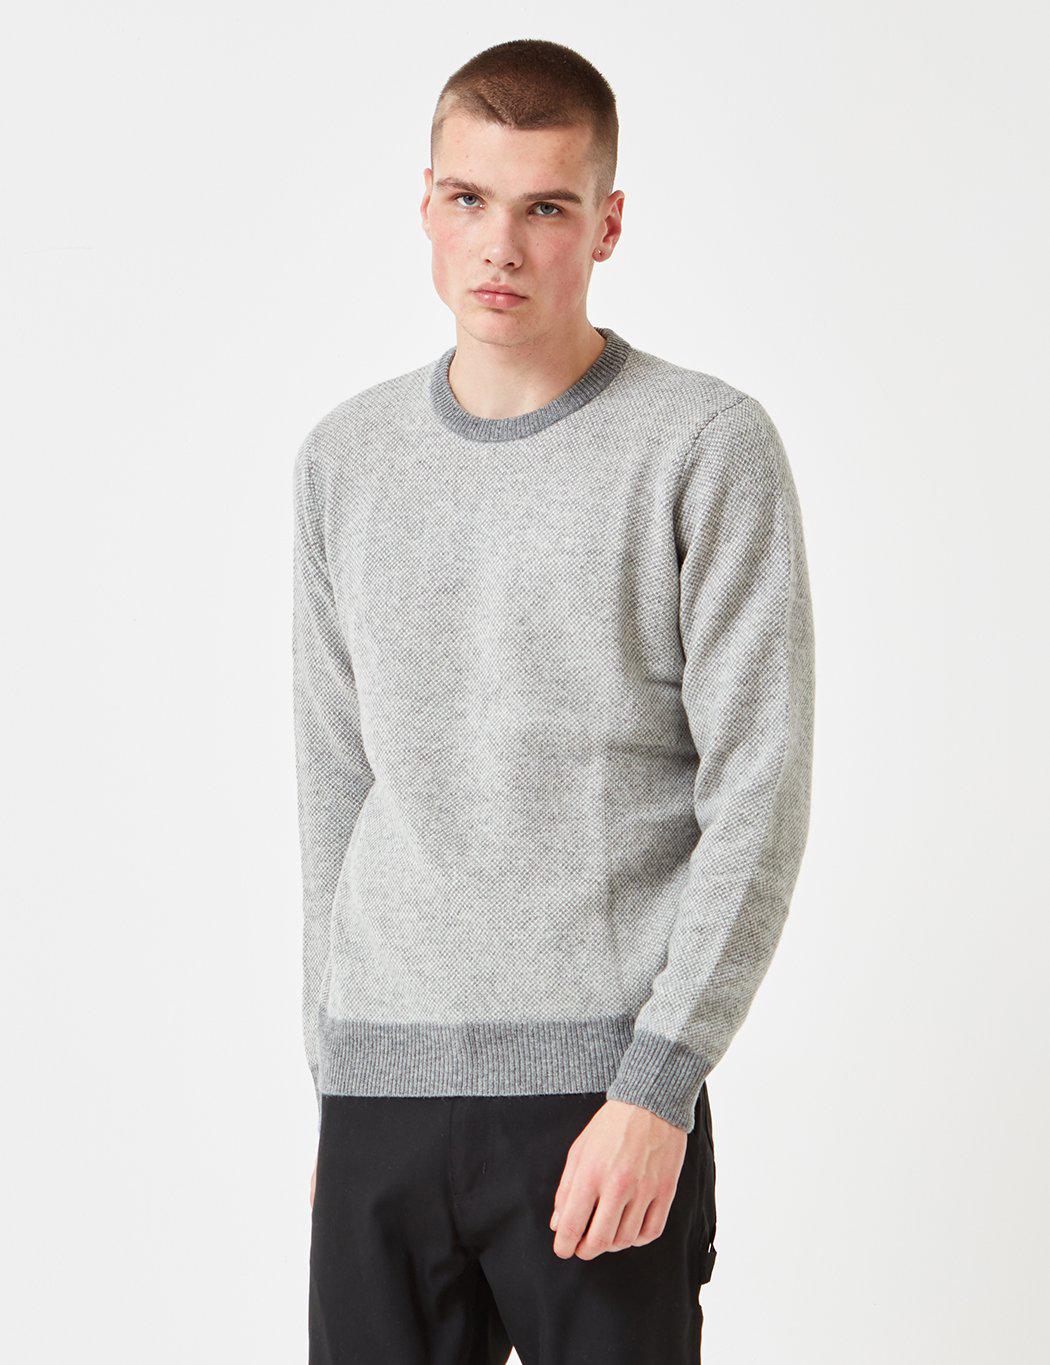 Carhartt Spooner Sweater Hotsell, 60% OFF | pselab.chem.polimi.it